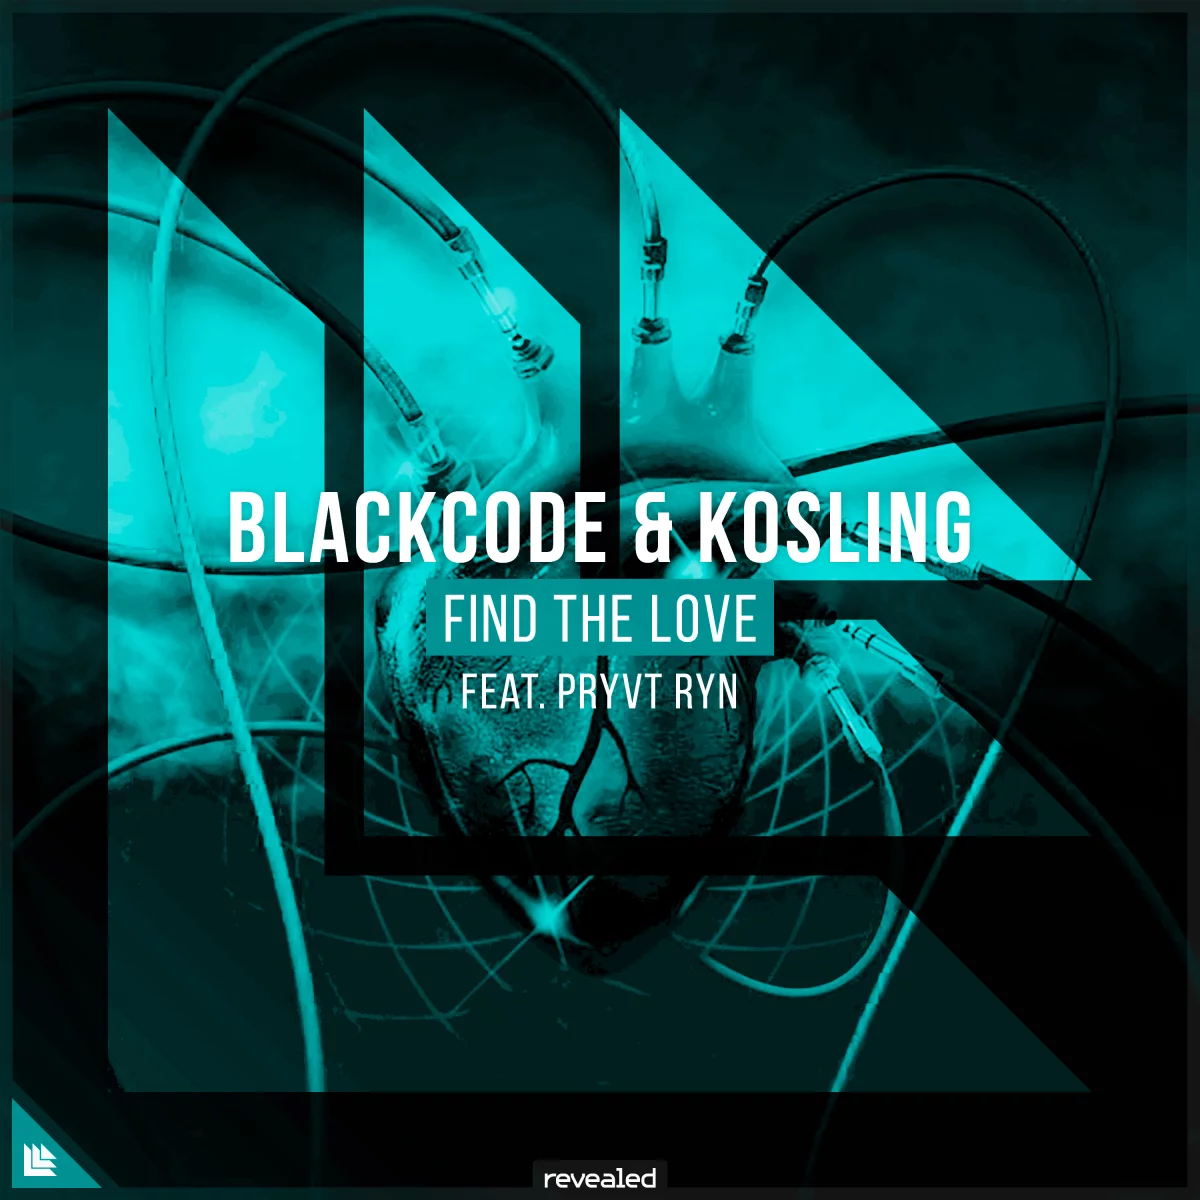 Find The Love - Blackcode⁠ & Kosling⁠ feat. PRYVT RYN⁠